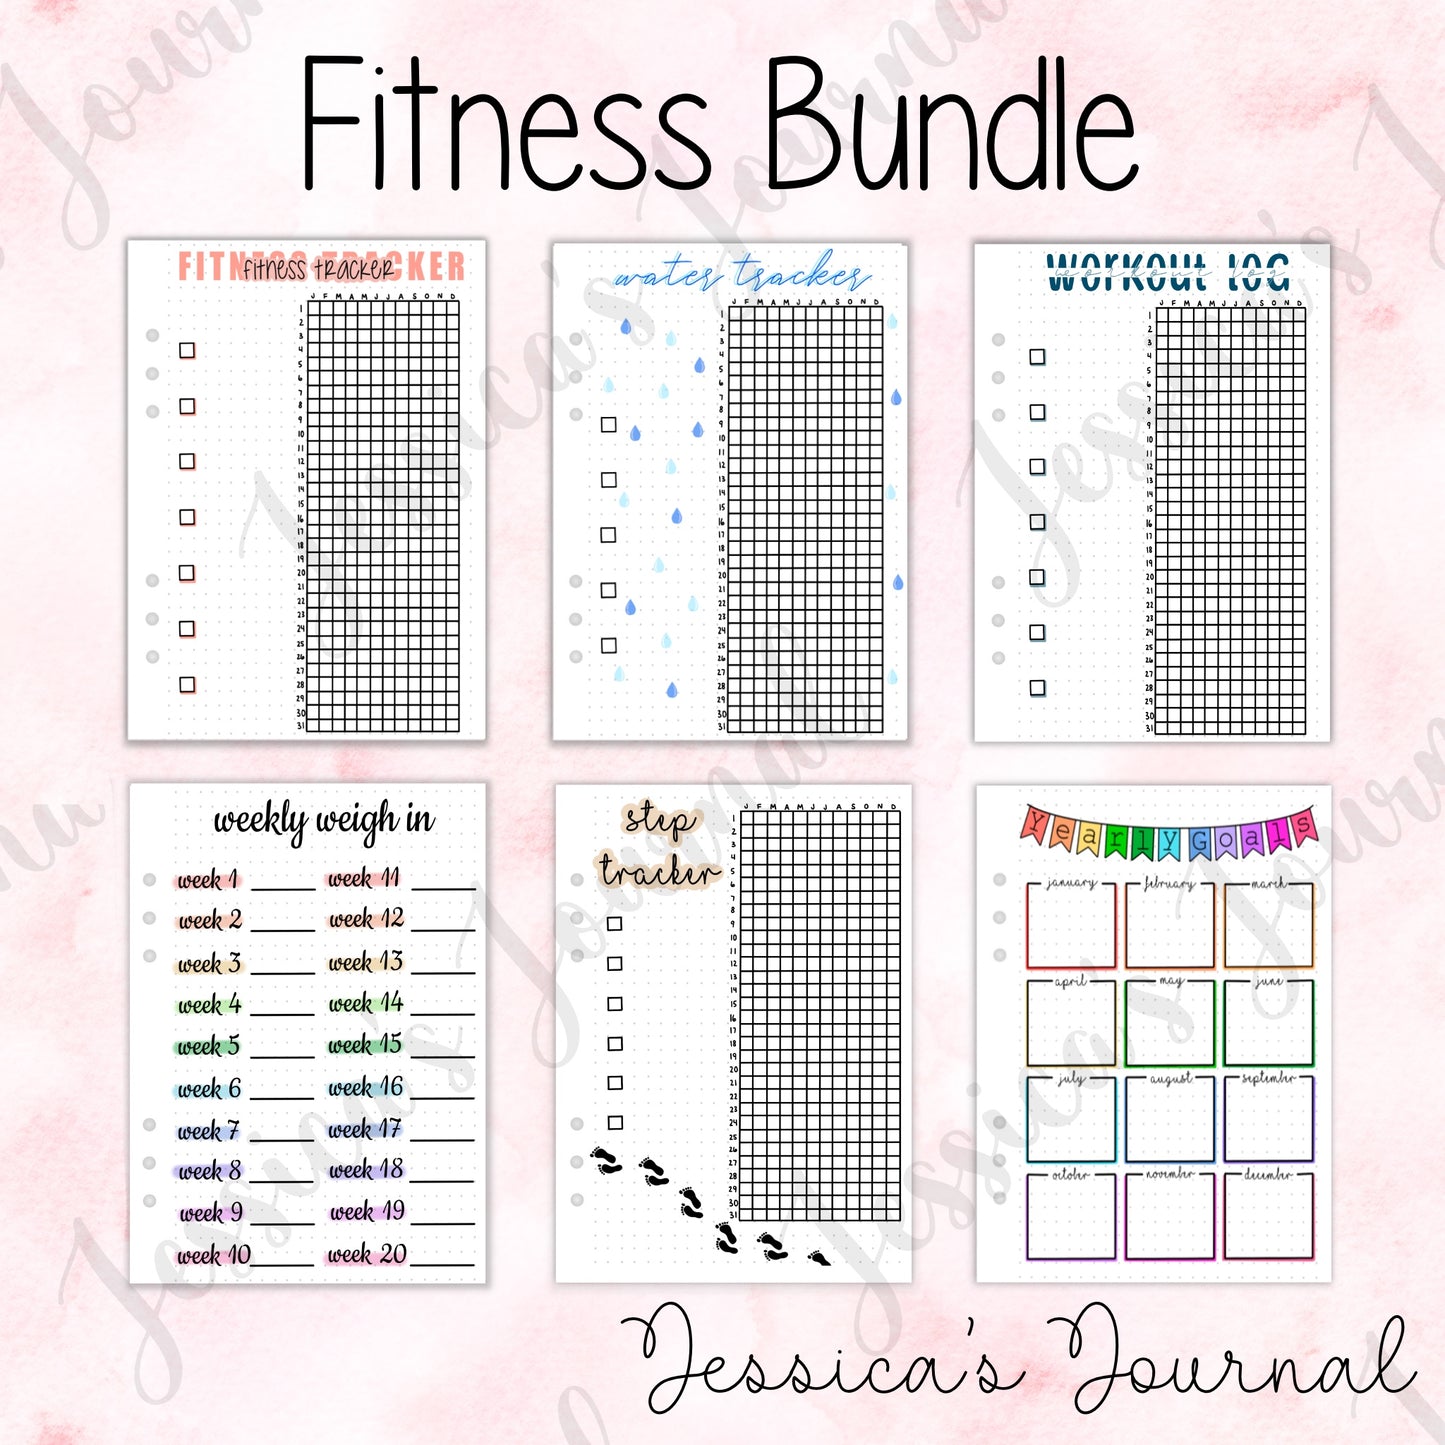 Spread Bundles | Jessica's Journal